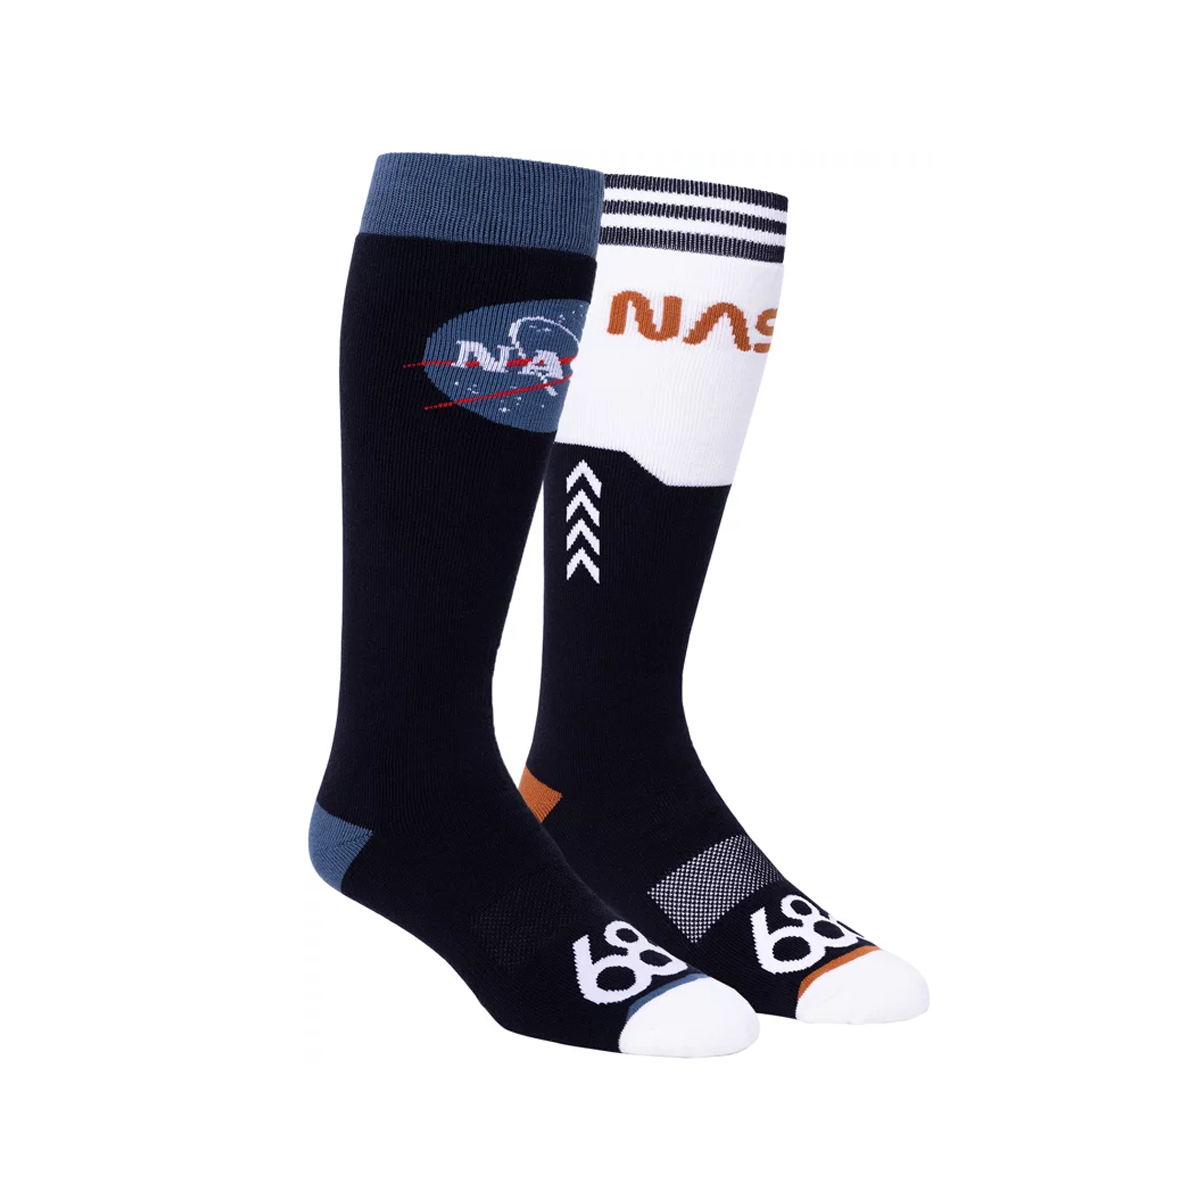 686 x NASA Socks 2-Pack - Assorted Colors